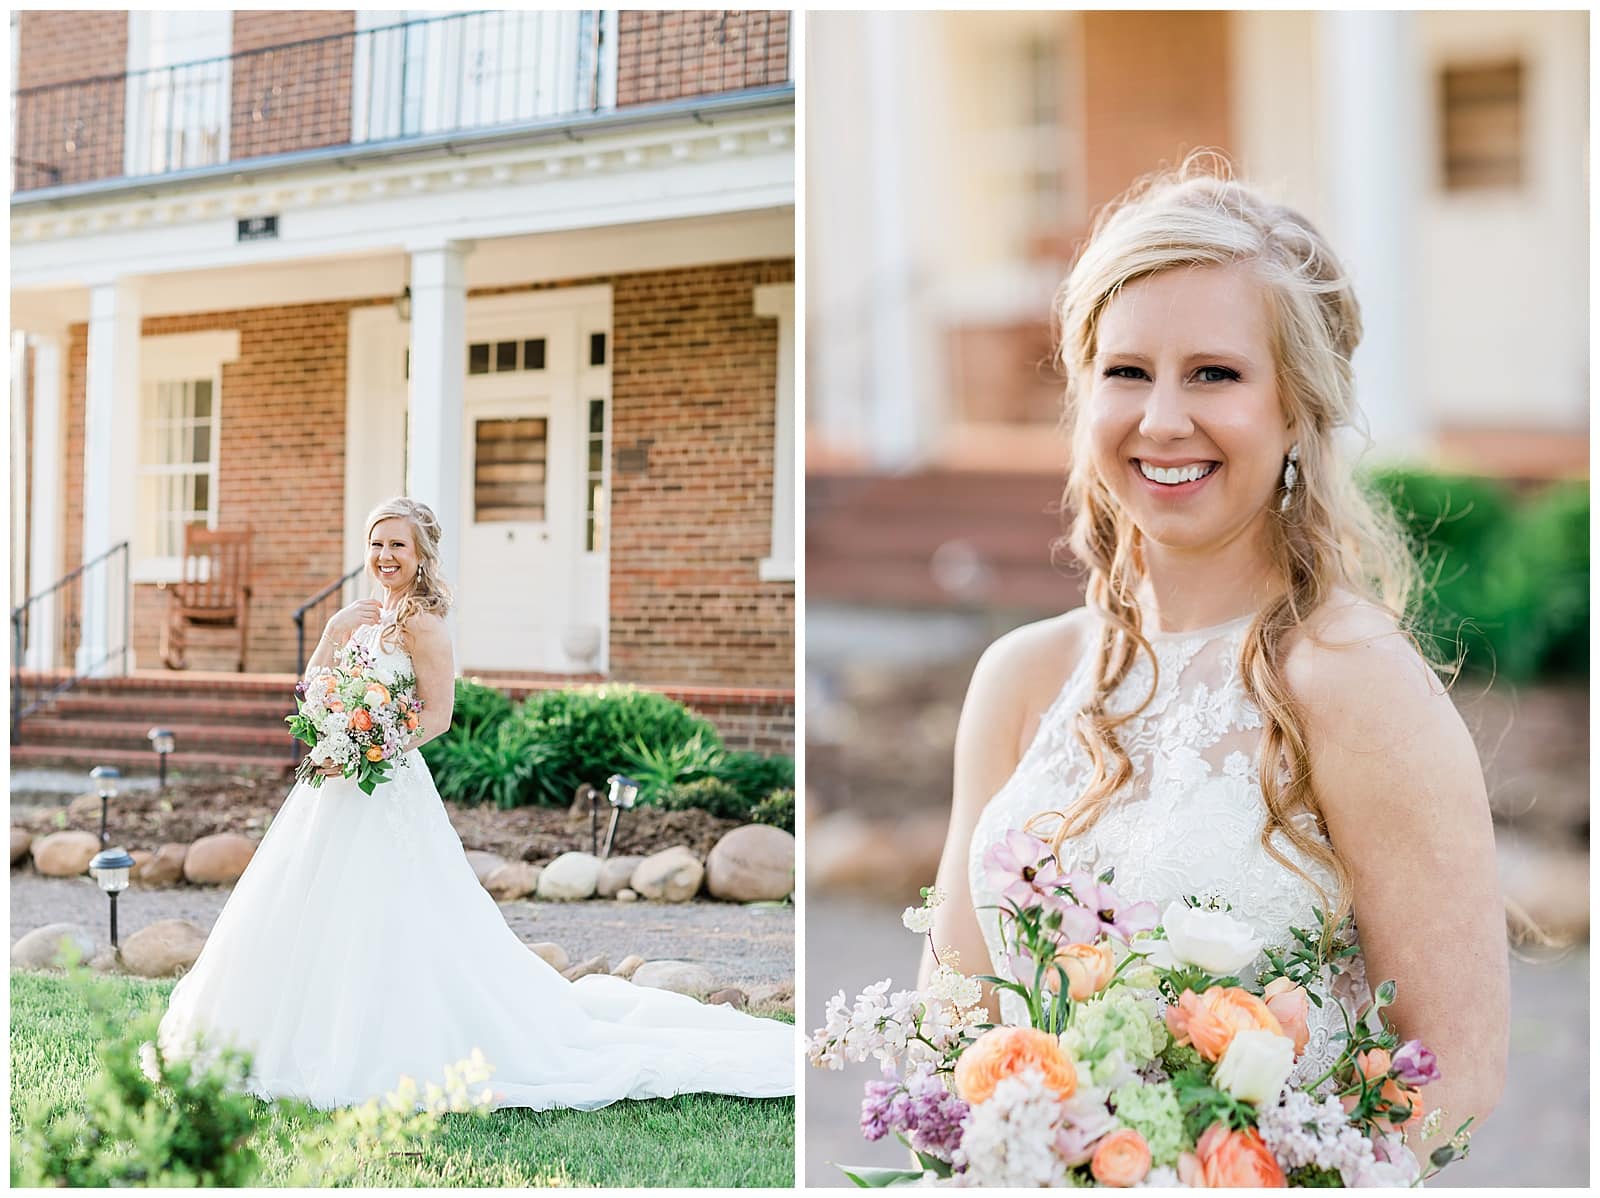 Danielle-Defayette-Photography-Cherokee-Creek-Farm-Bridal-Wedding-Portraits_0010.jpg